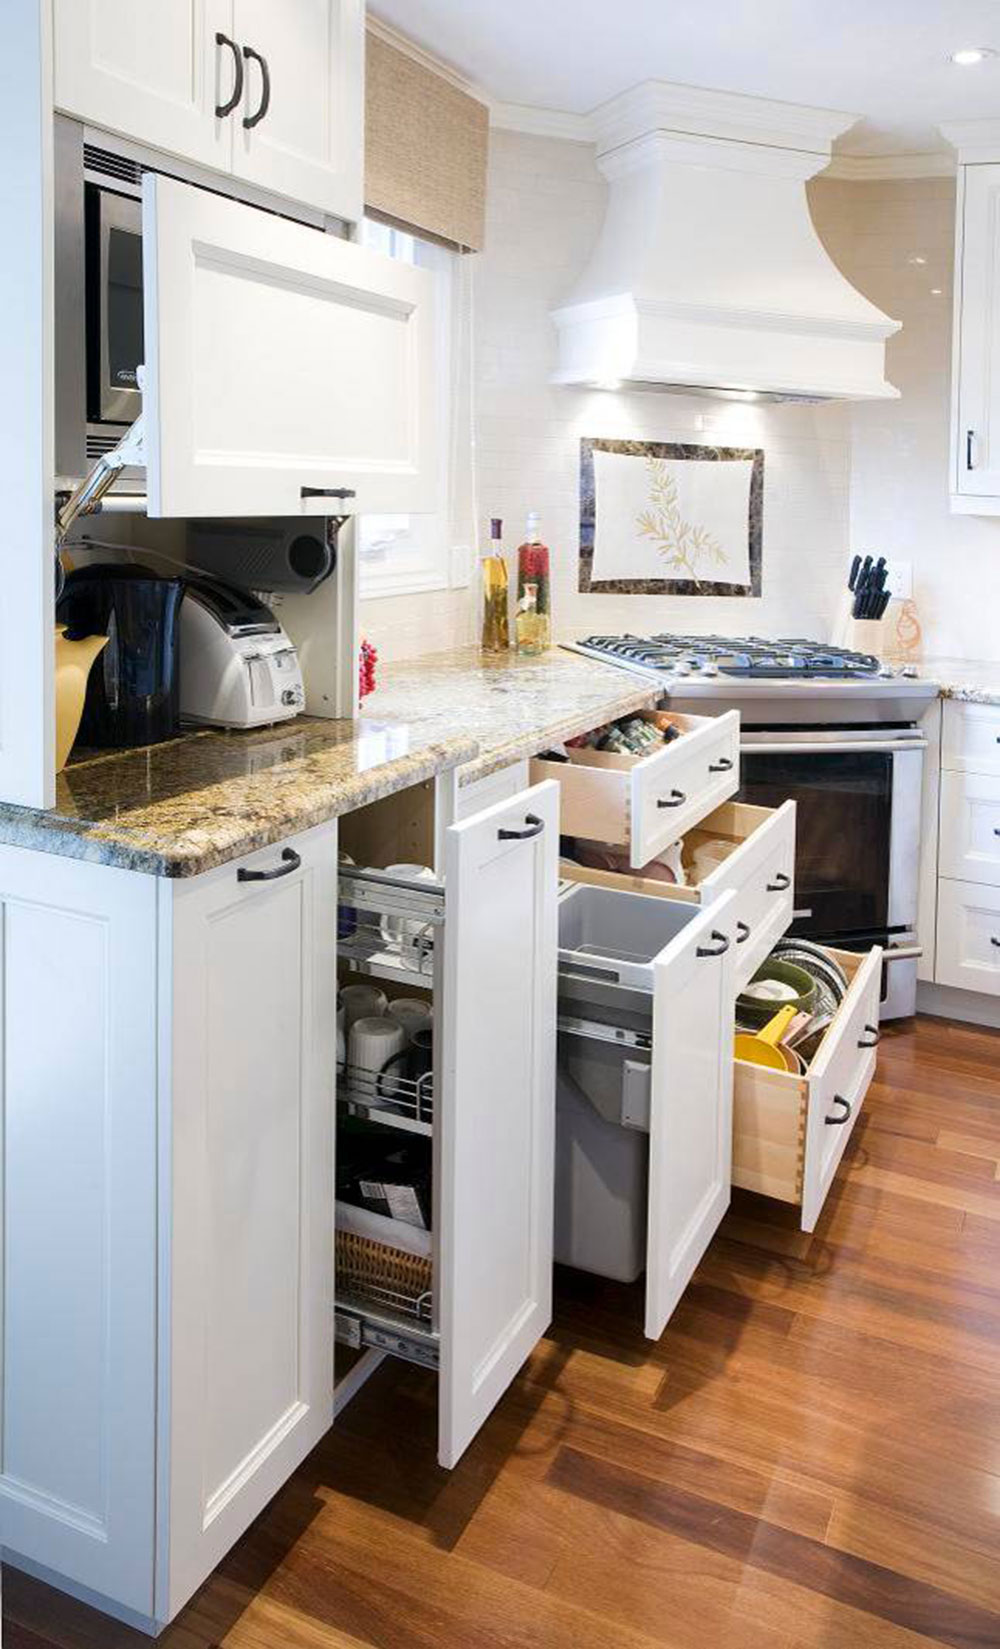 Quail-Creek-Kitchen-by-Paragon-Kitchens Basement kitchen ideas: Creating an amazing kitchen in your basement